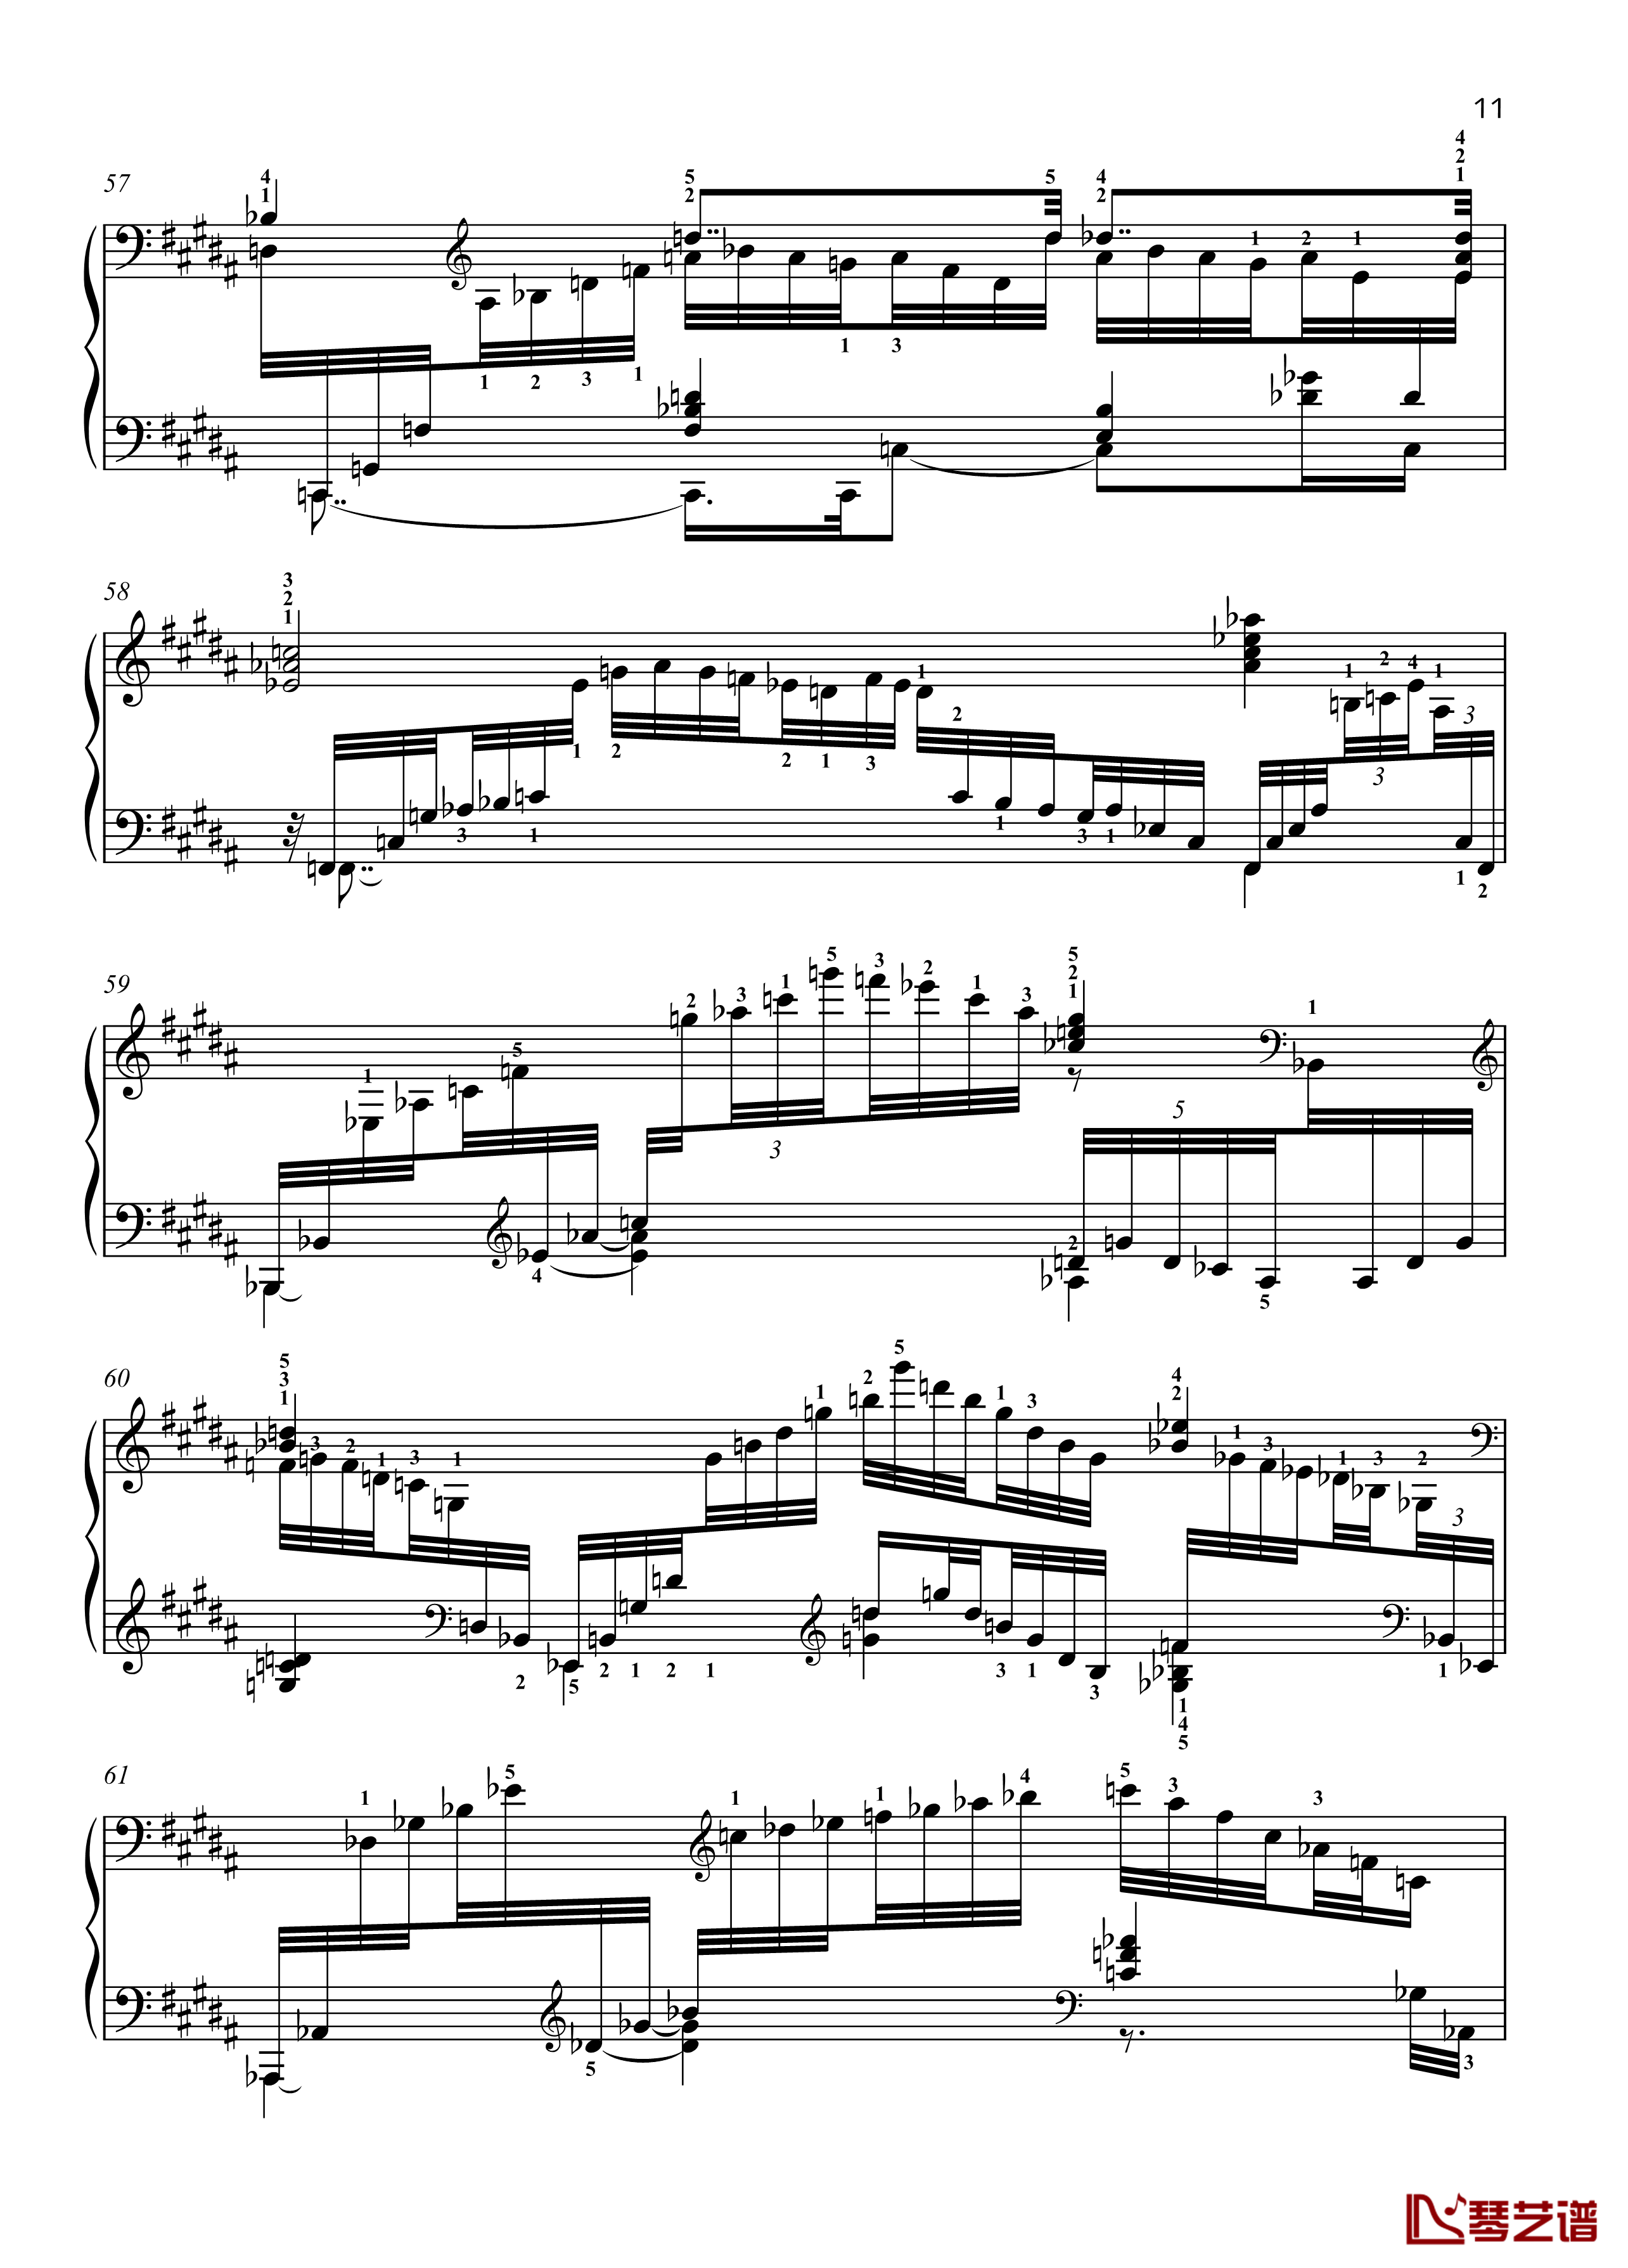 No. 4. Reminiscence钢琴谱-带指法-八首音乐会练习曲  Eight Concert ?tudes Op 40 - -爵士-尼古拉·凯帕斯汀11